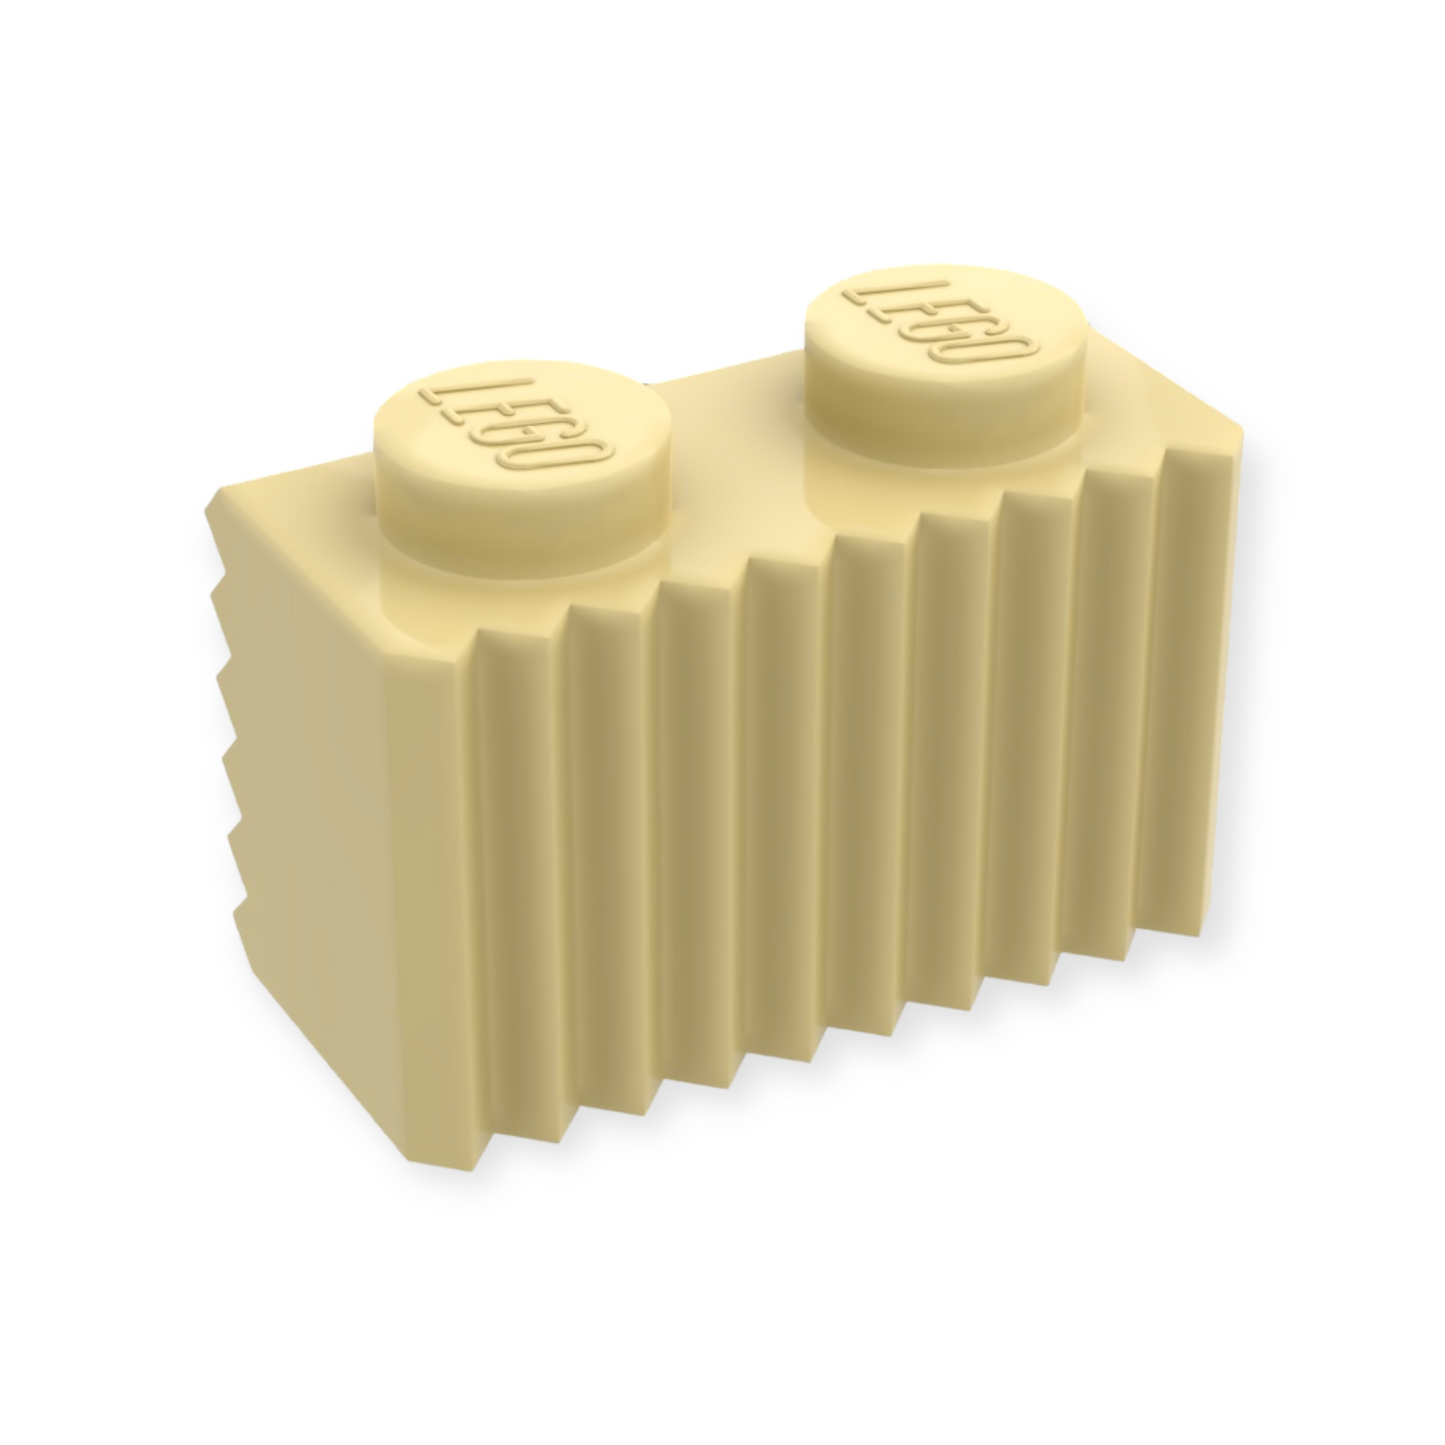 LEGO Brick Modified 1x2 - Grill / Fluted Profile in Tan